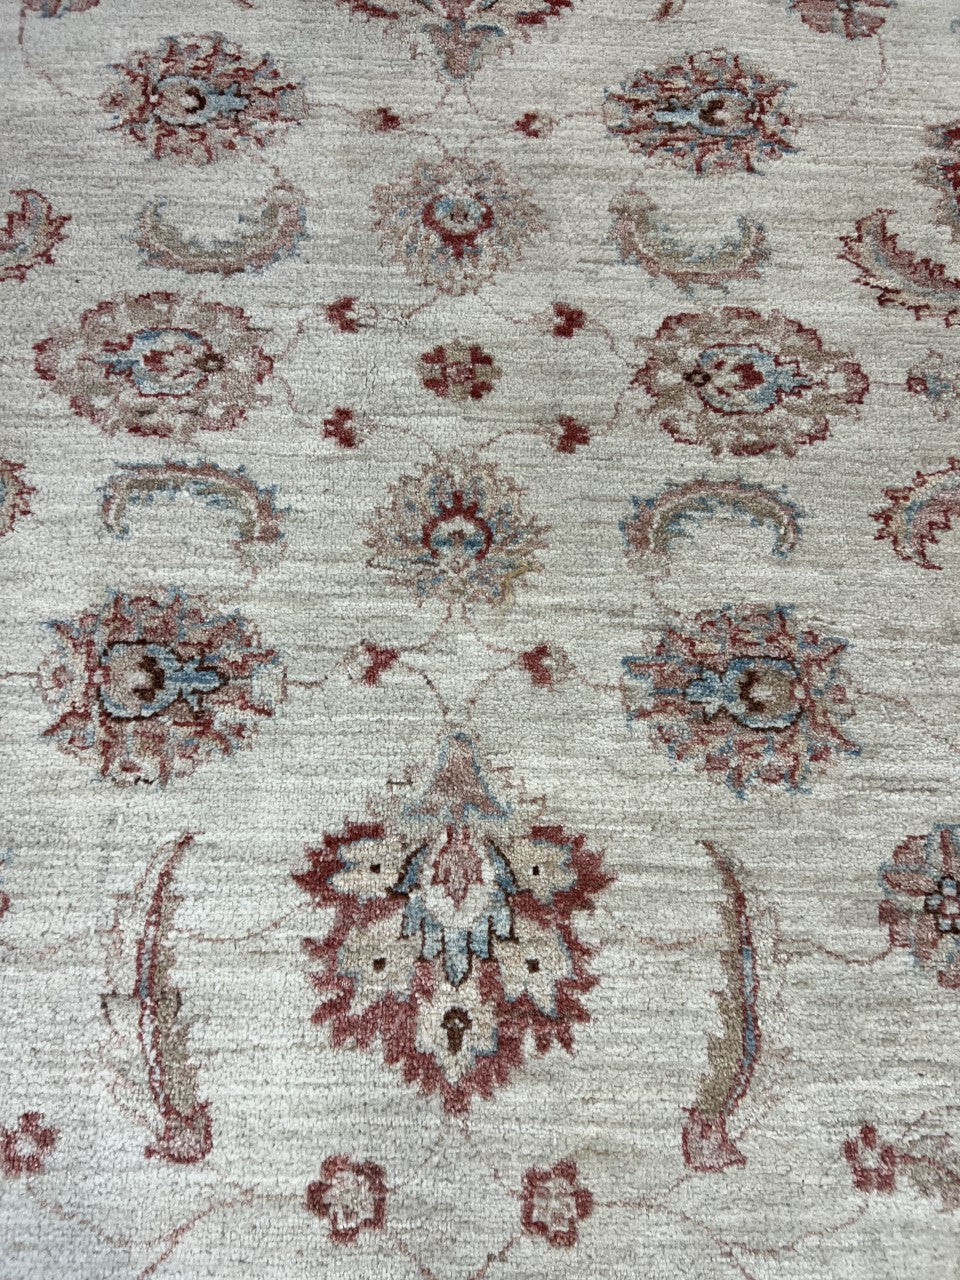 Amazing Afghan Zigler new decorative rug